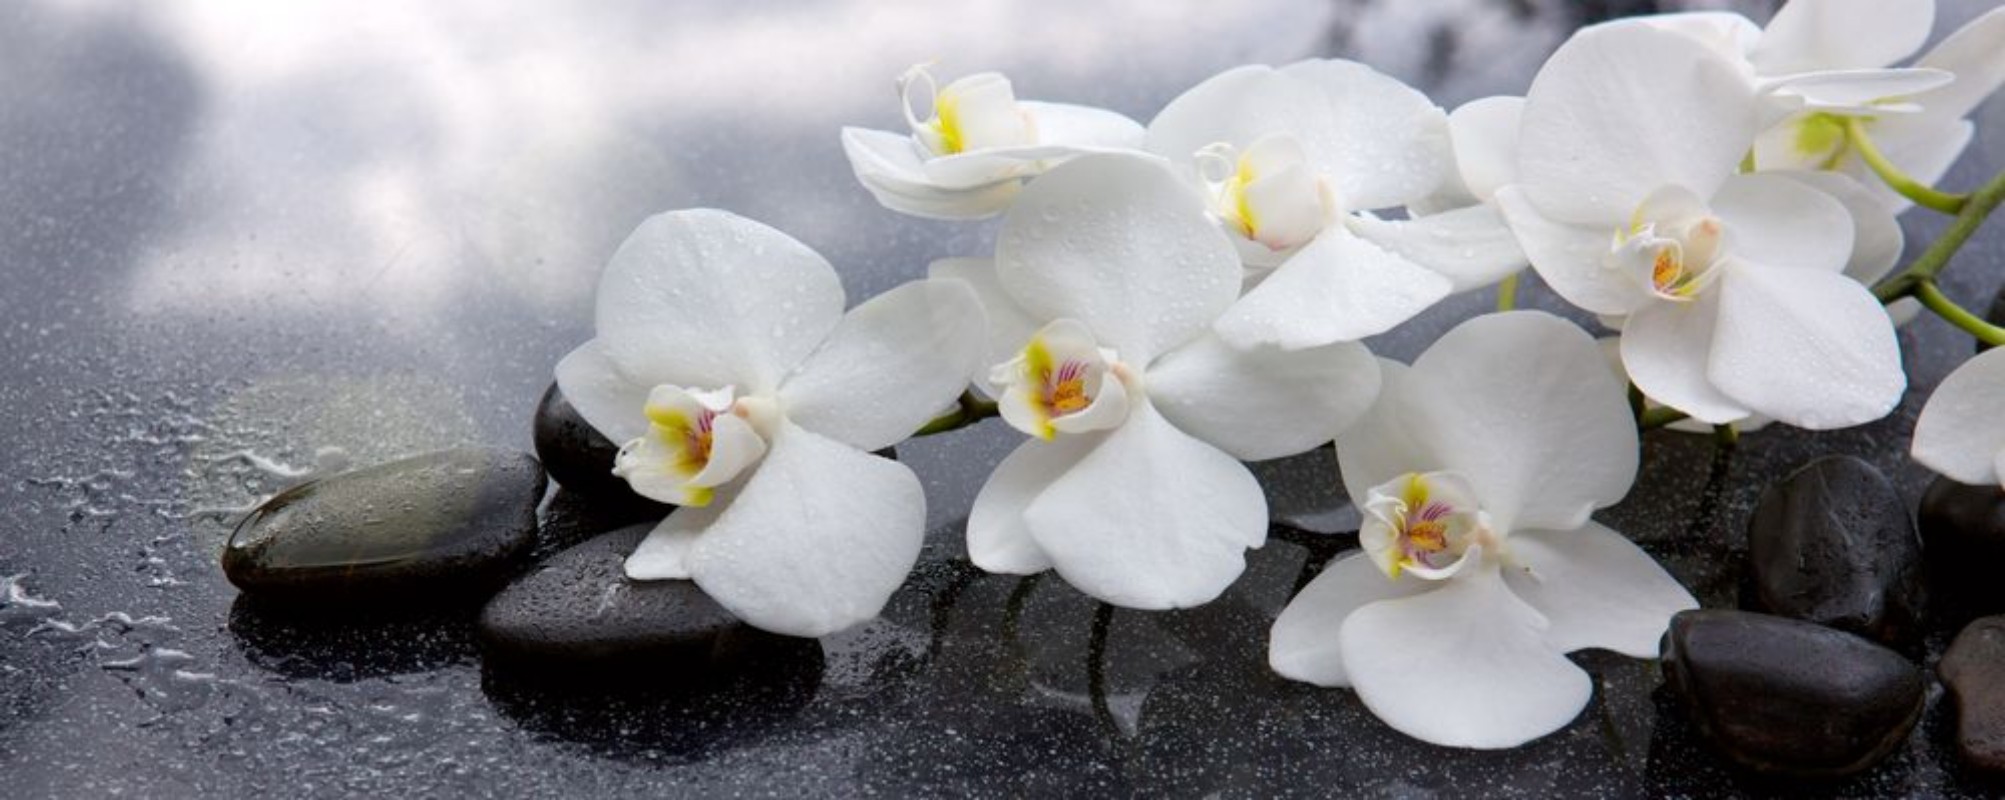 Image de White orchid and black stones close up